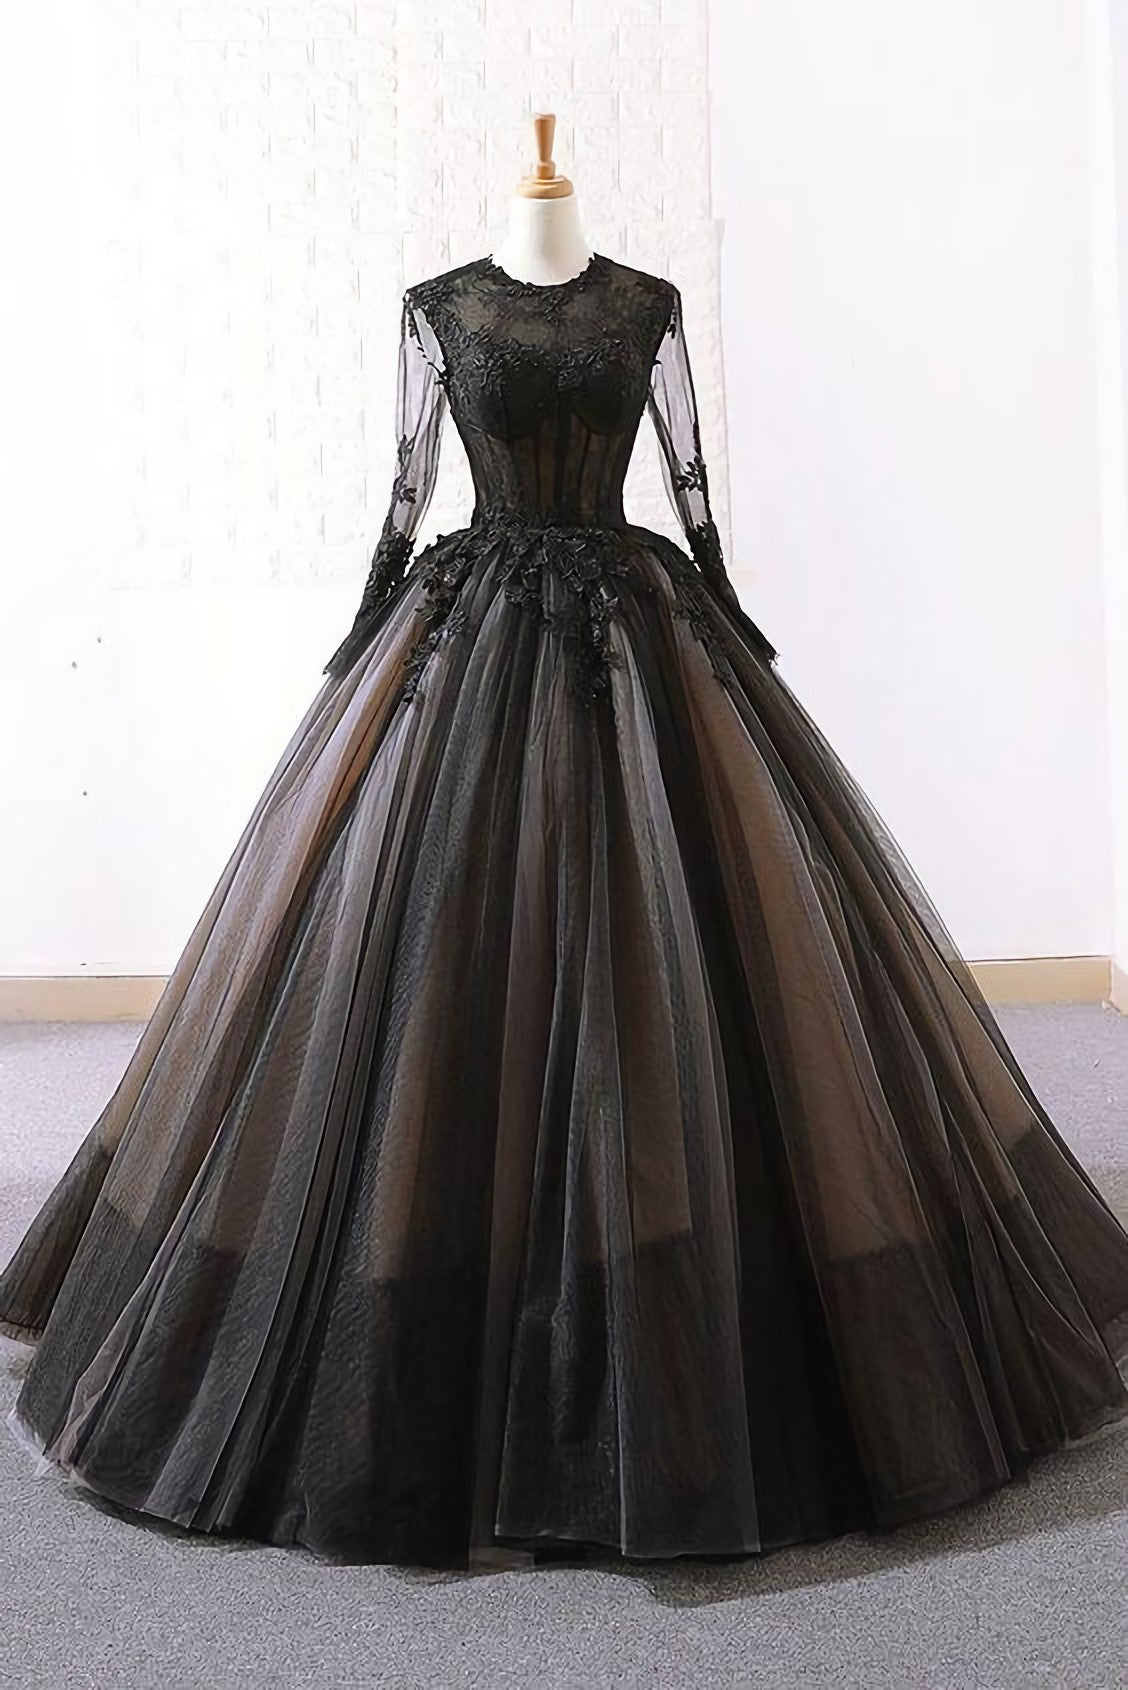 Long Black Corset Ball Gown Evening Dress, Corset Prom Dresses outfit, Evening Dress Designer